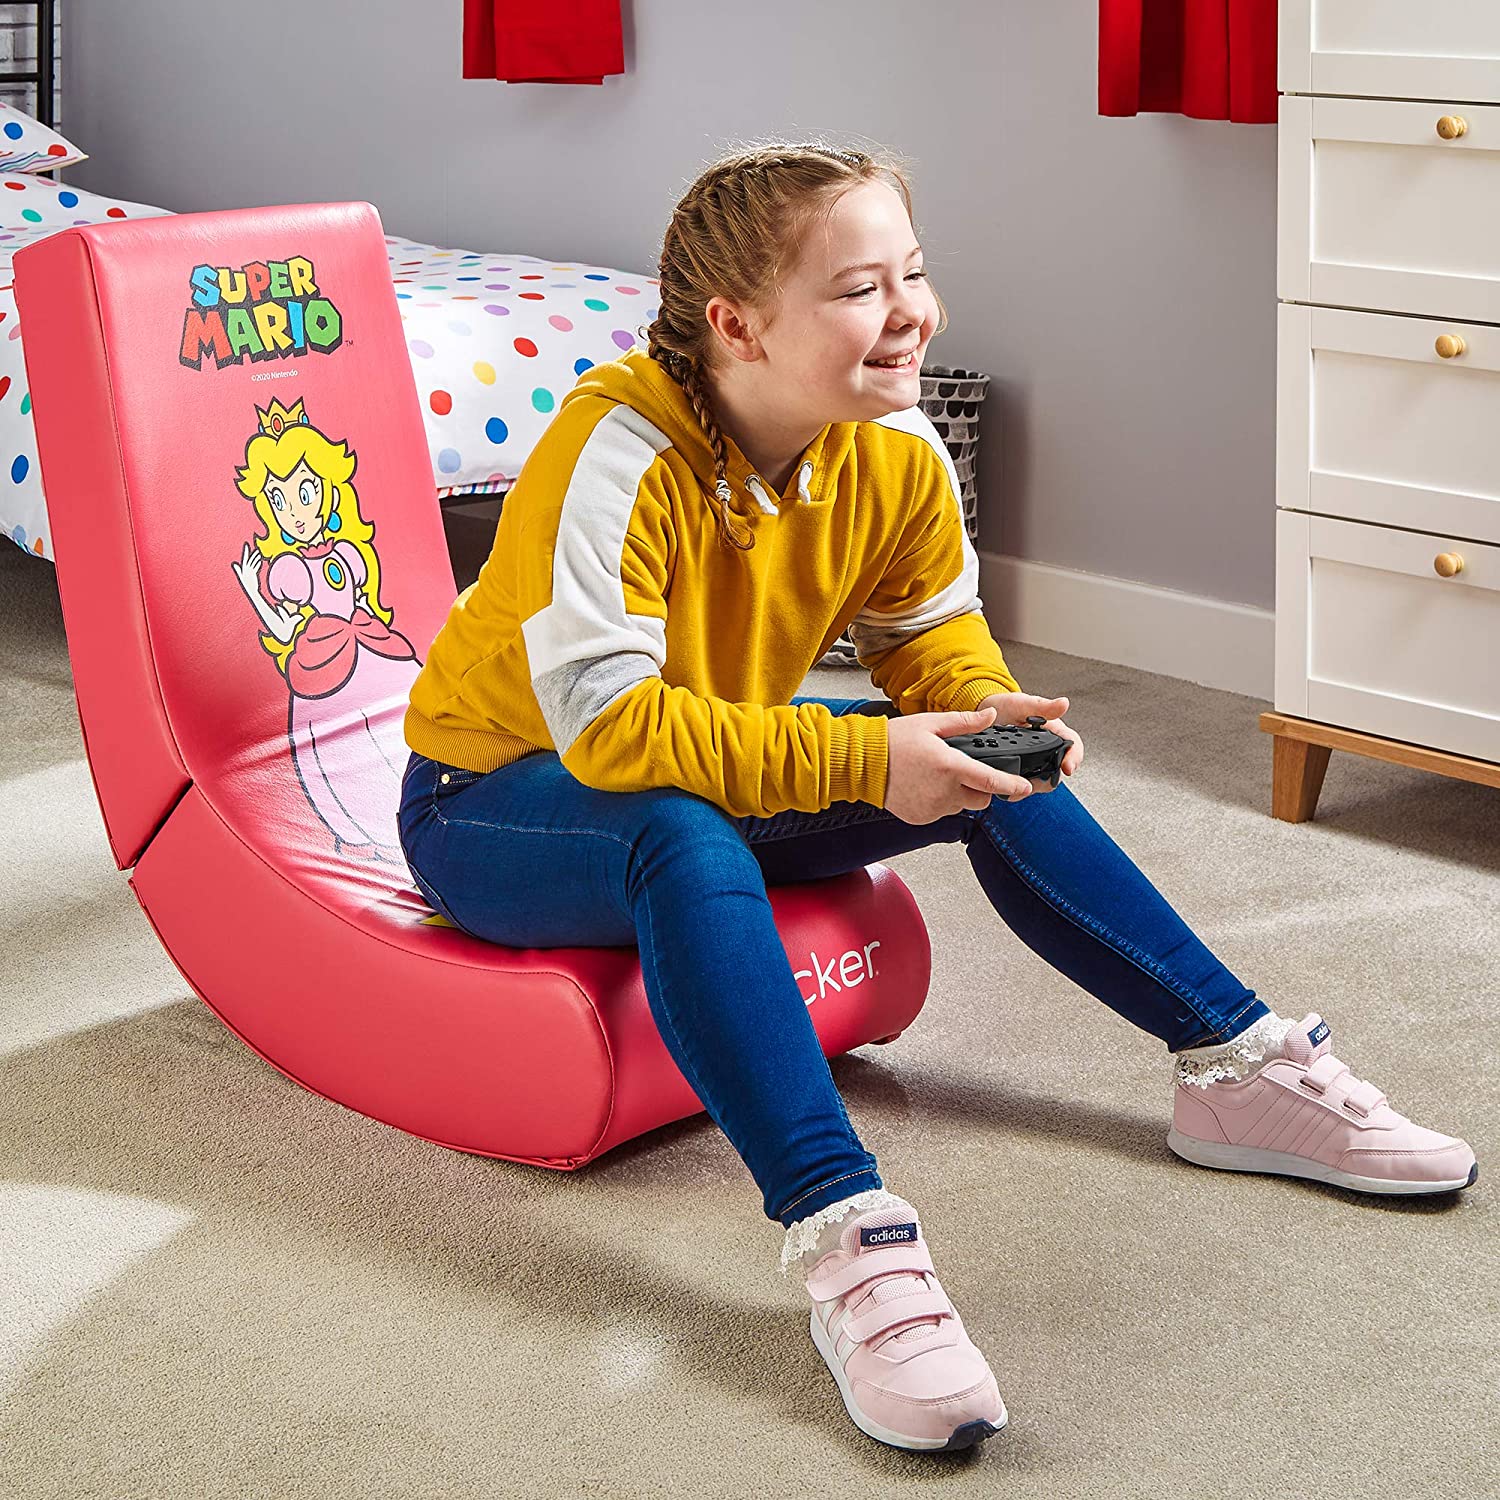 X Rocker - Nintendo Video Rocker Super Mario All-Star Collection Princess Peach Gaming Chair